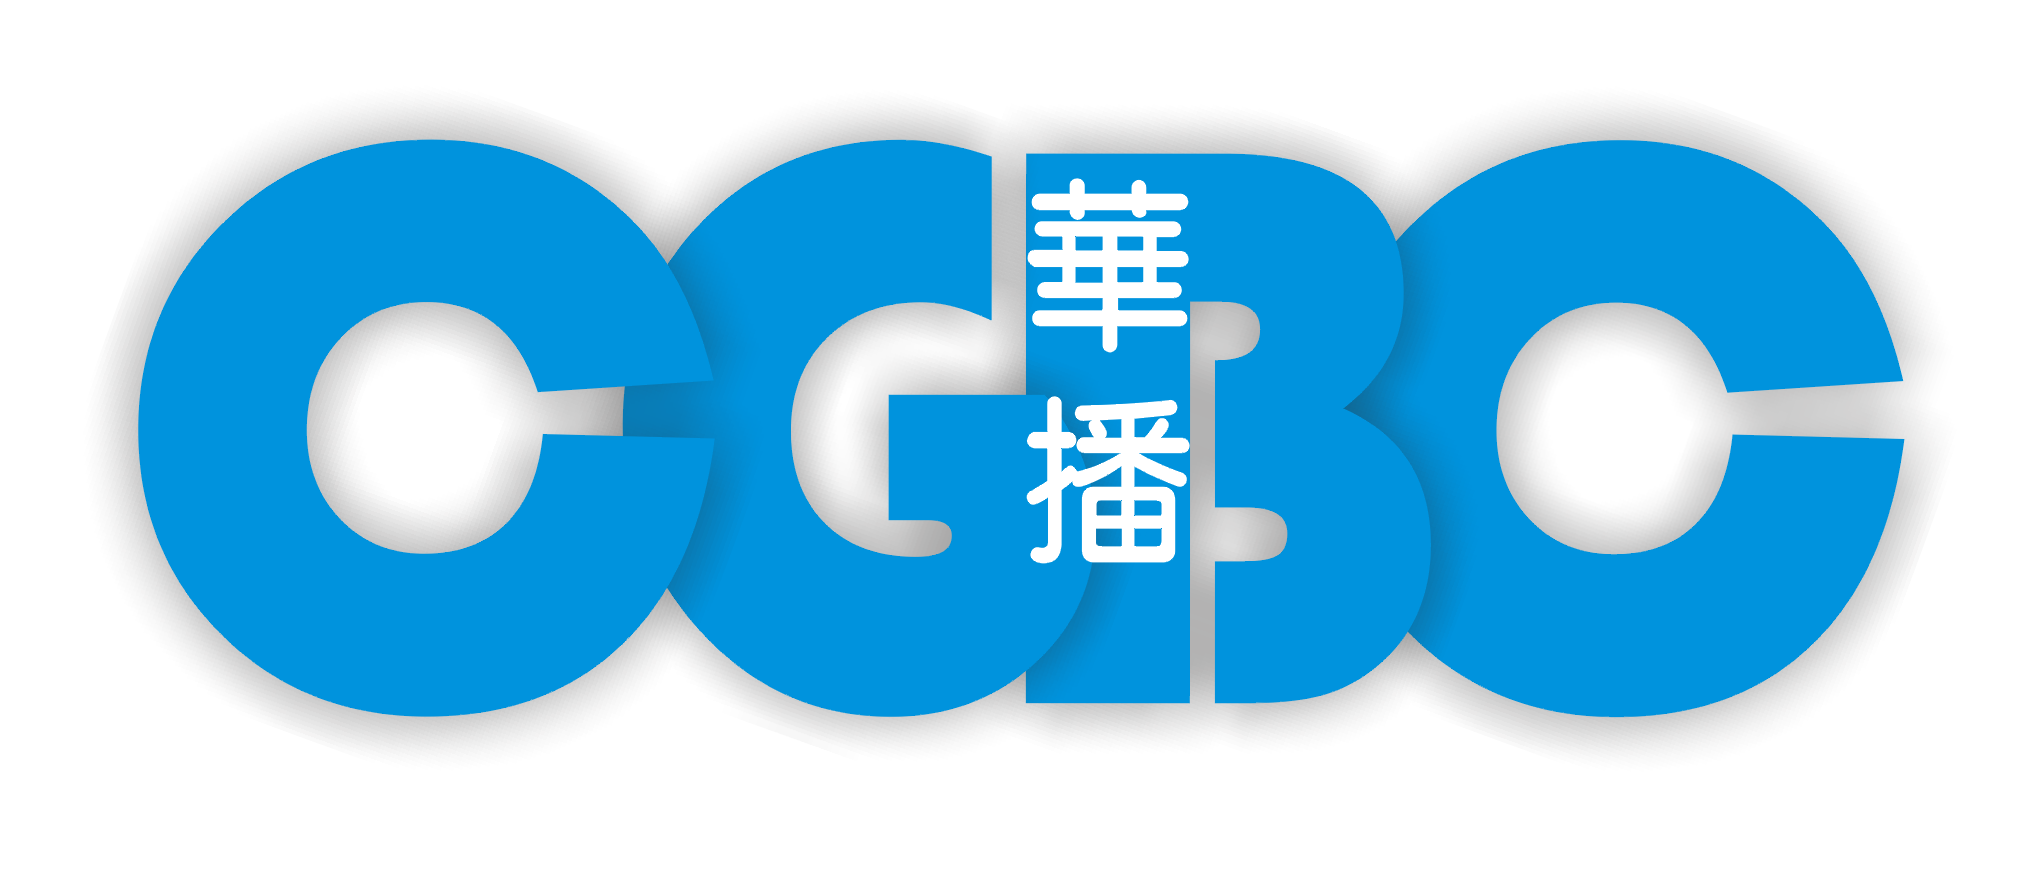 CGBC (Chinese Gospel Broadcasting Centre of Canada) logo